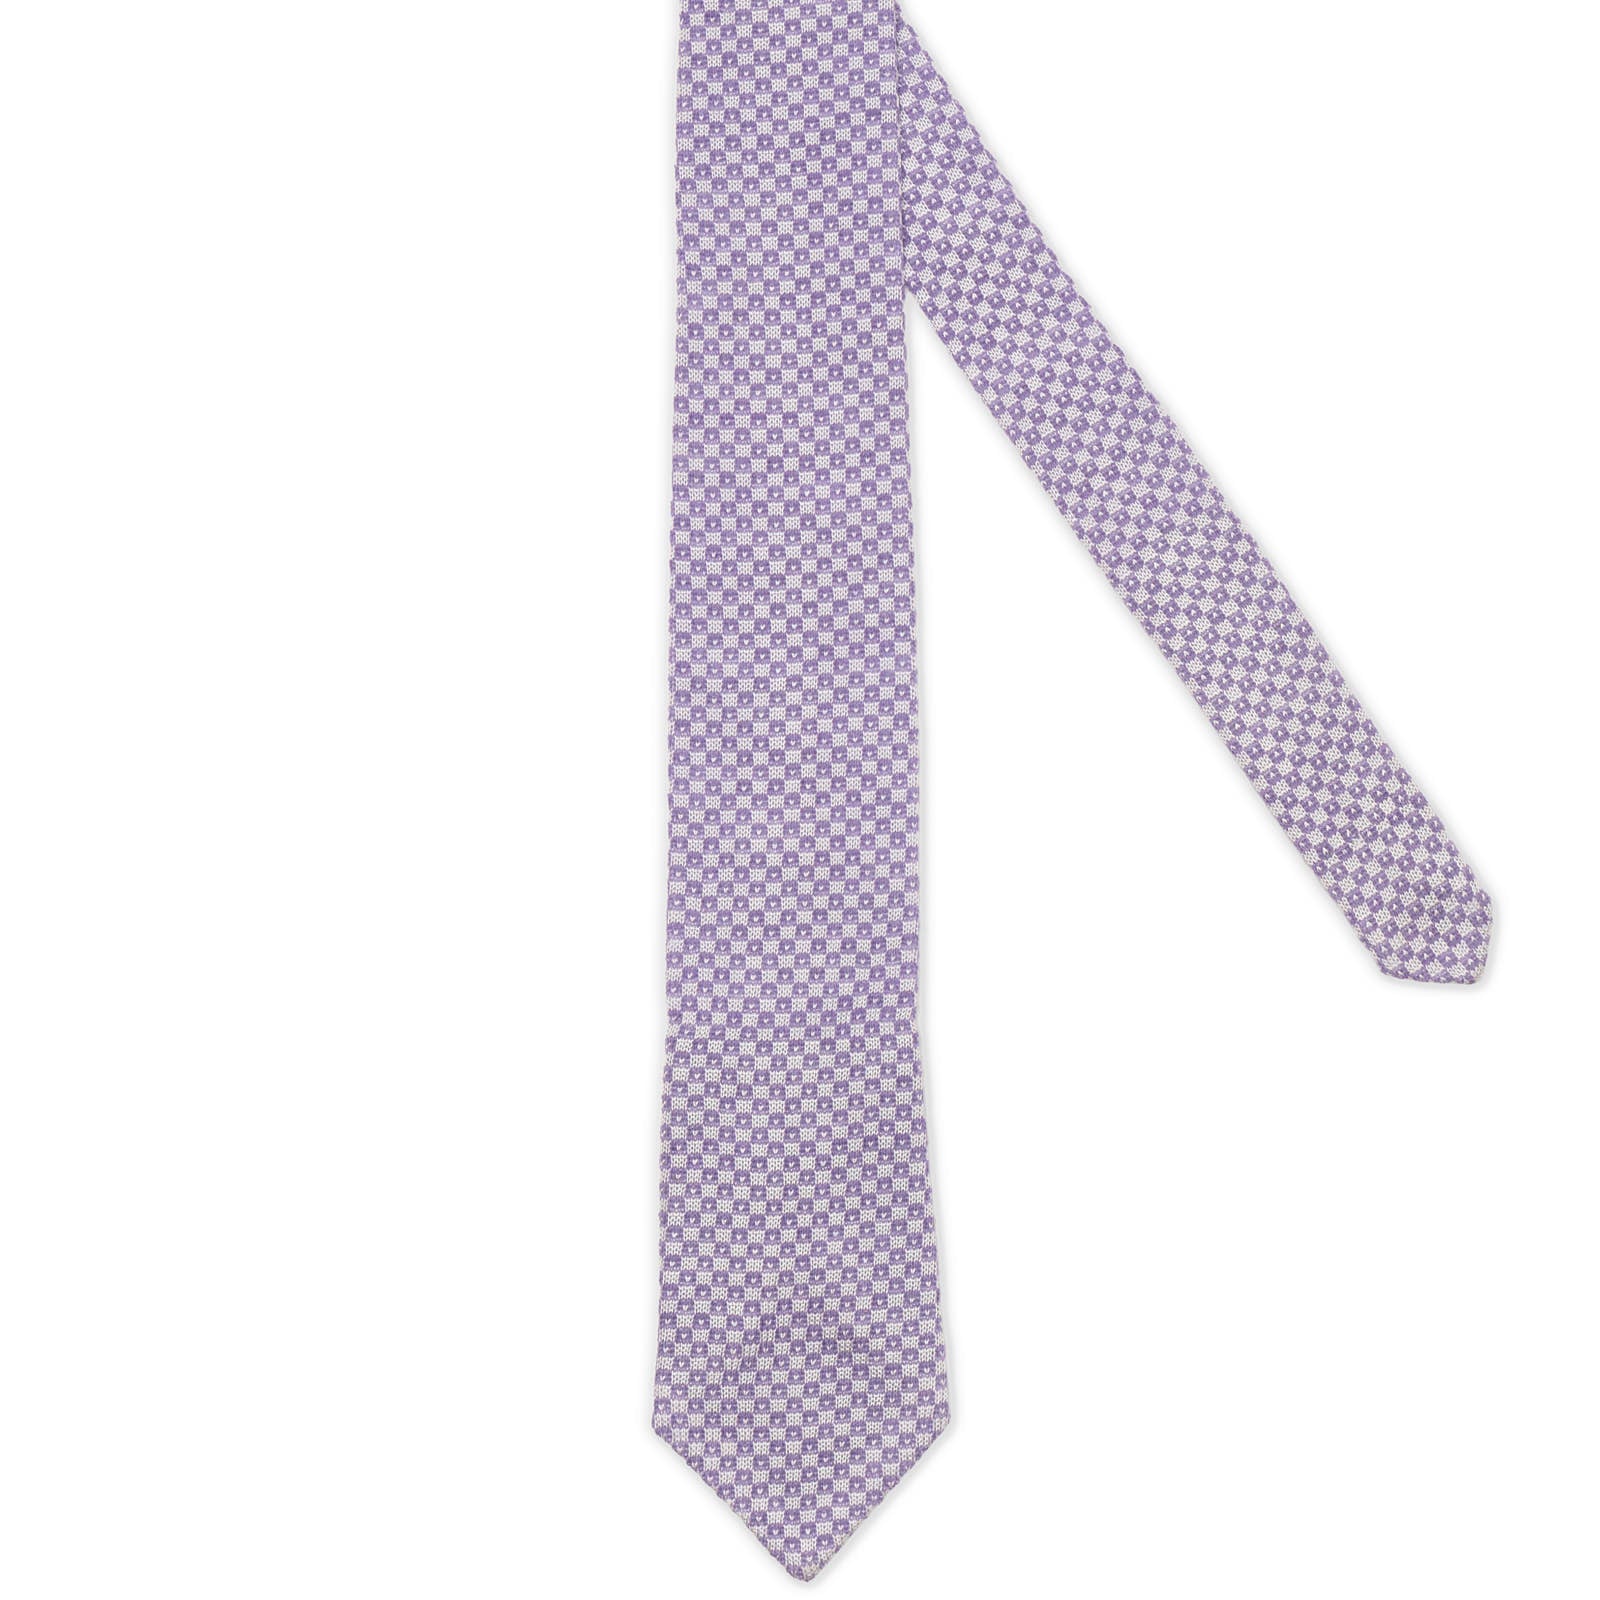 VANNUCCI Purple and White Geometric Wool Tie NEW